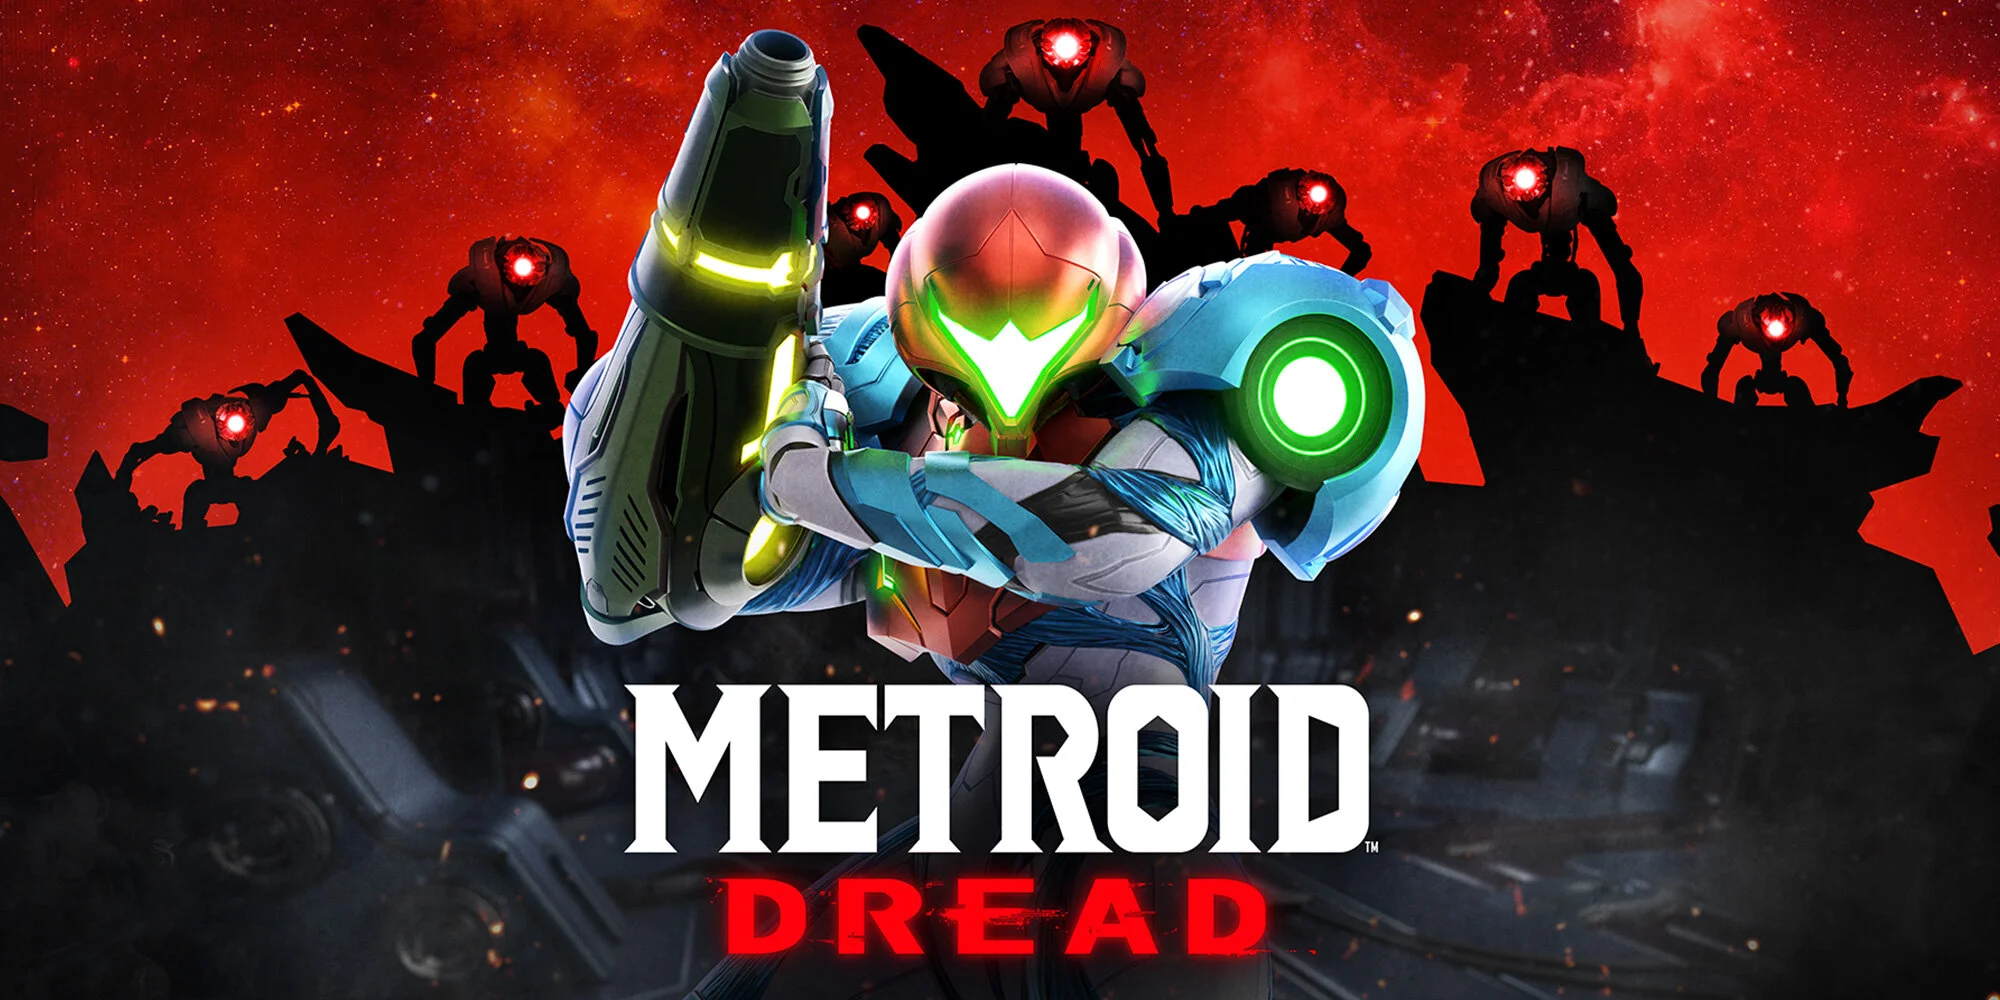 metroid dread trailer teases the return of a classic villain!